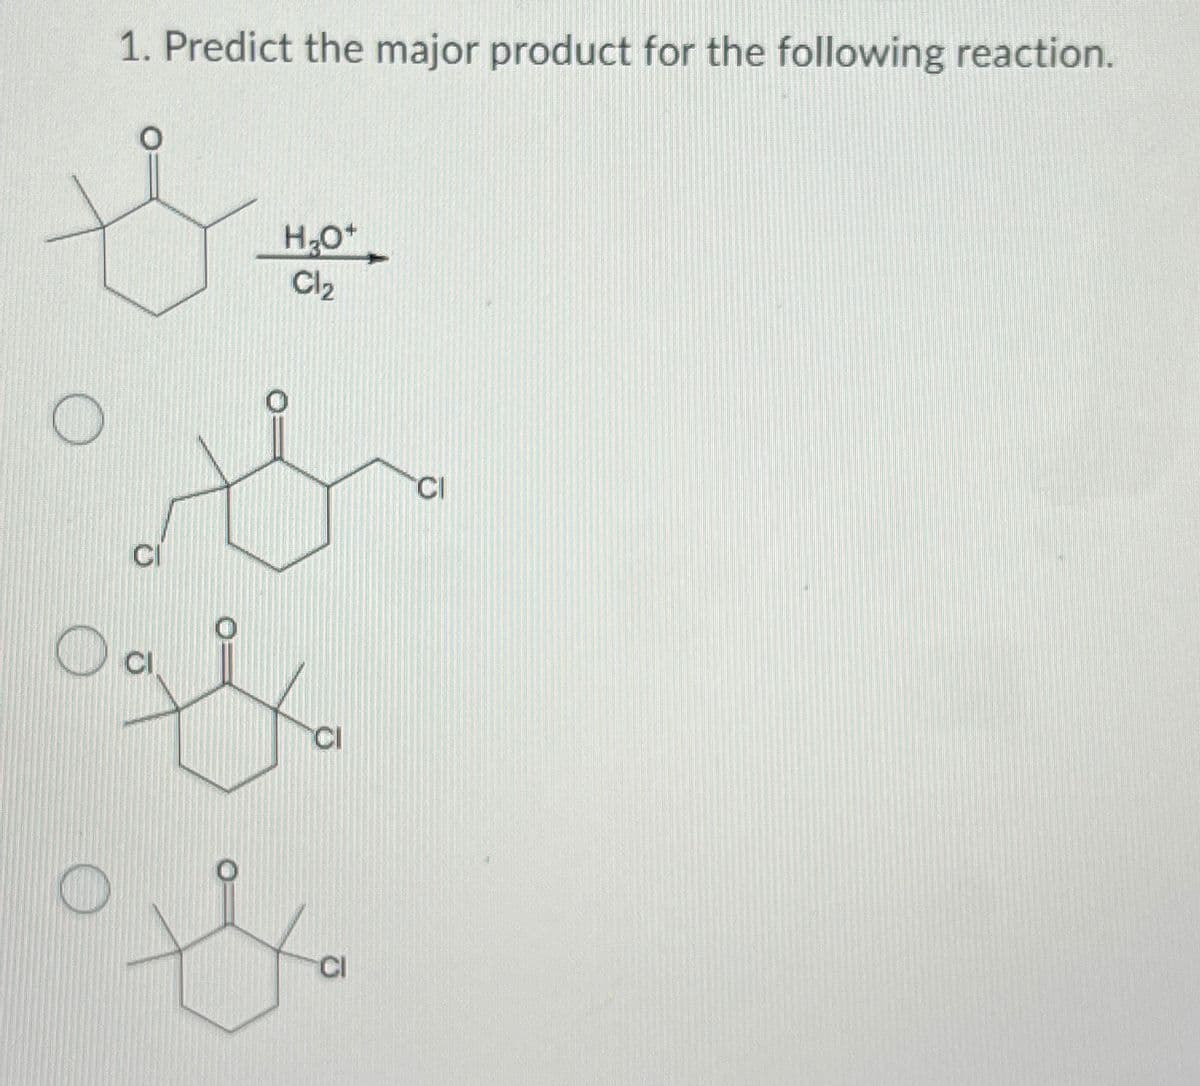 1. Predict the major product for the following reaction.
H₂O+
Cl₂
CI
CI
CI
CI
CI